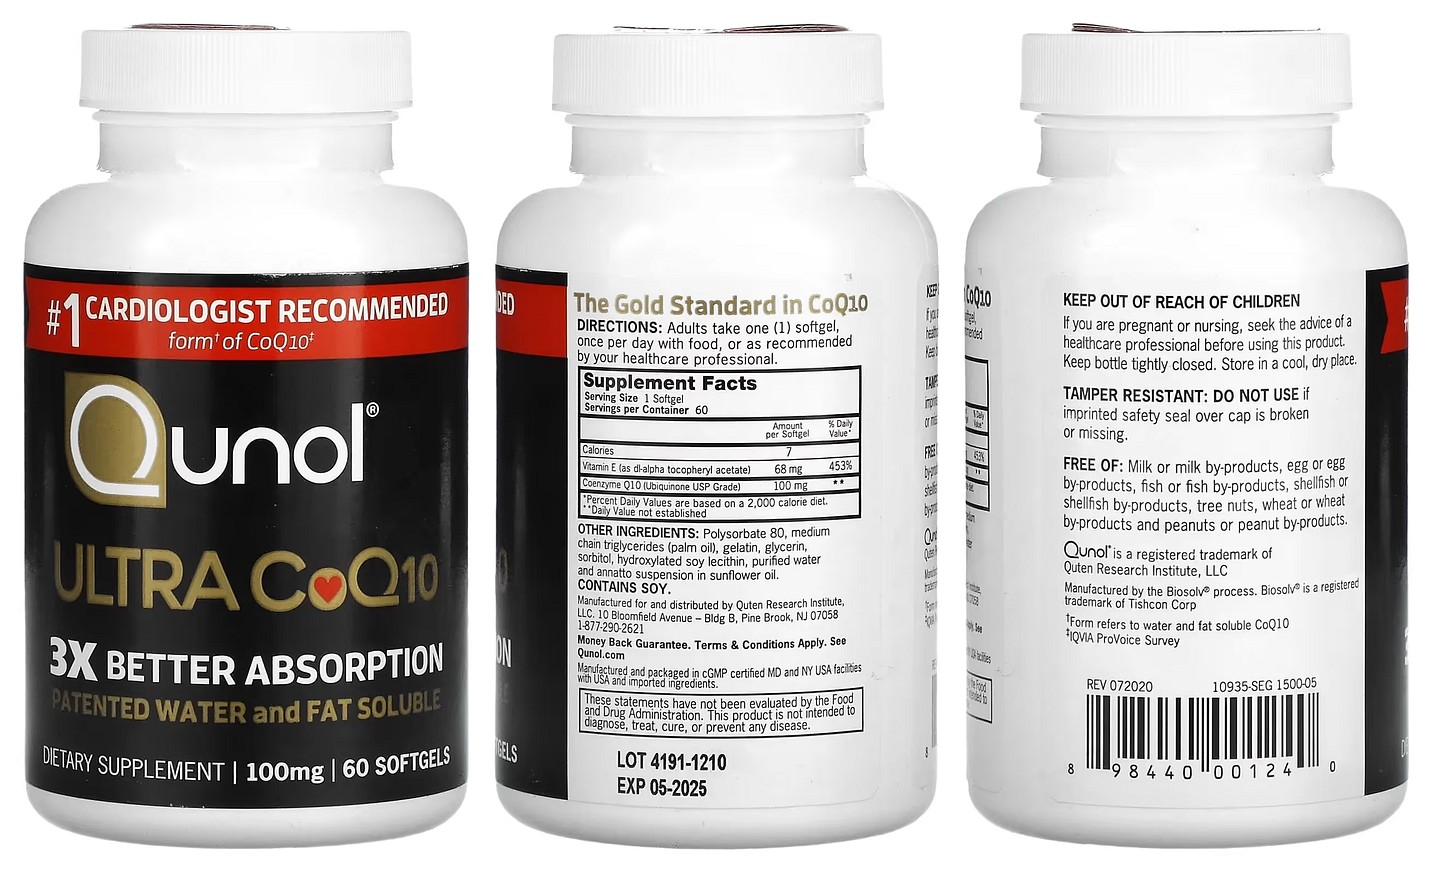 Qunol, Ultra CoQ10 packaging